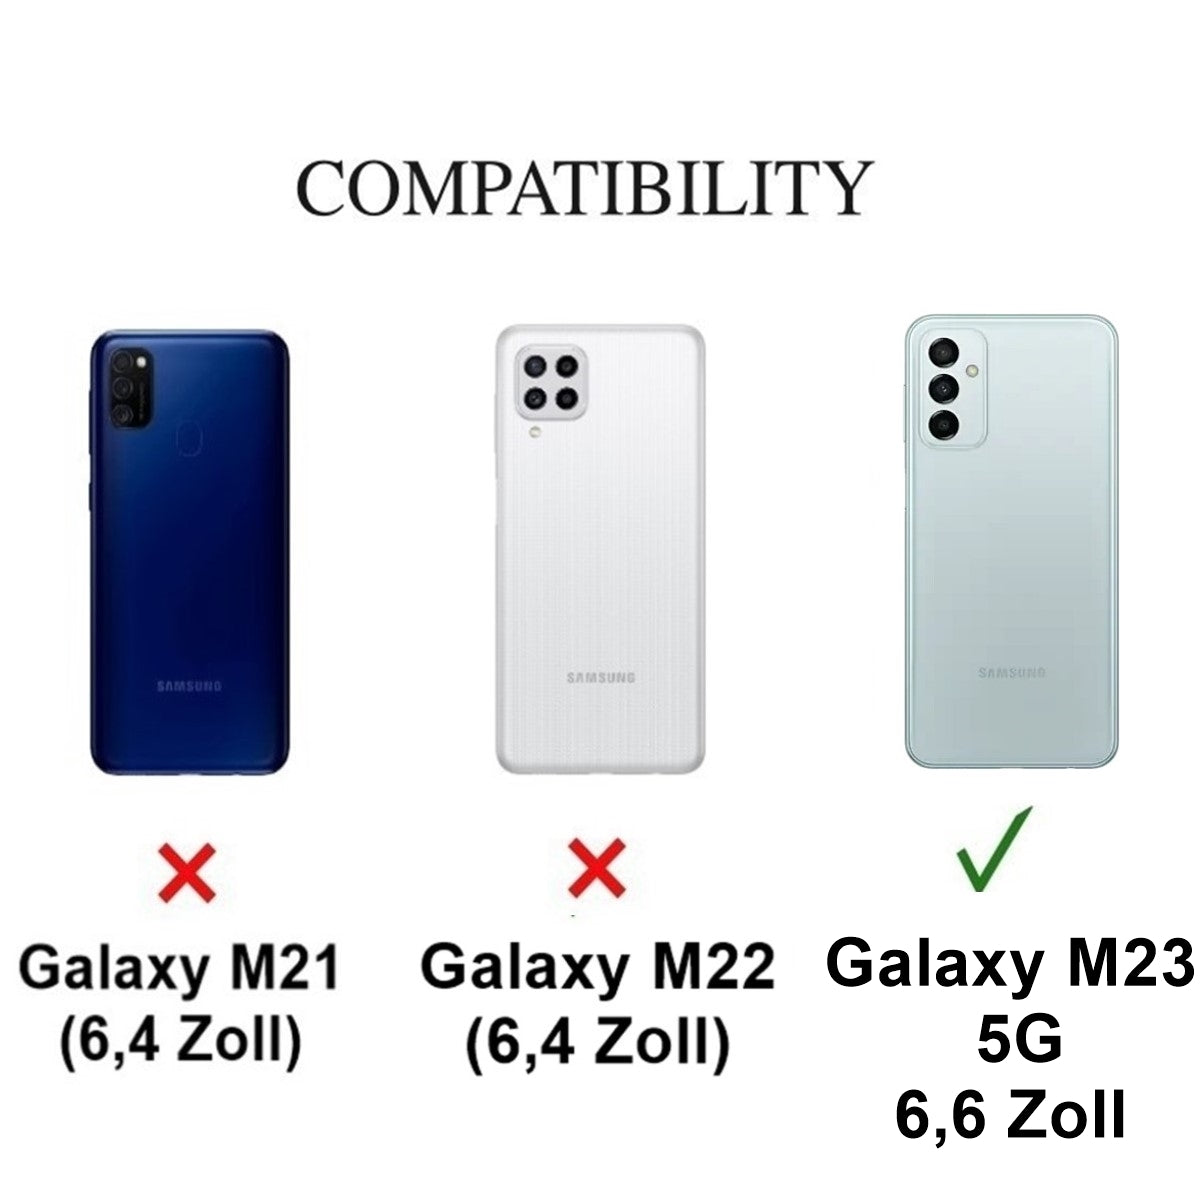 Hülle für Samsung Galaxy M13/M23 5G Handyhülle Flip Case Cover Etui Mandala Grau